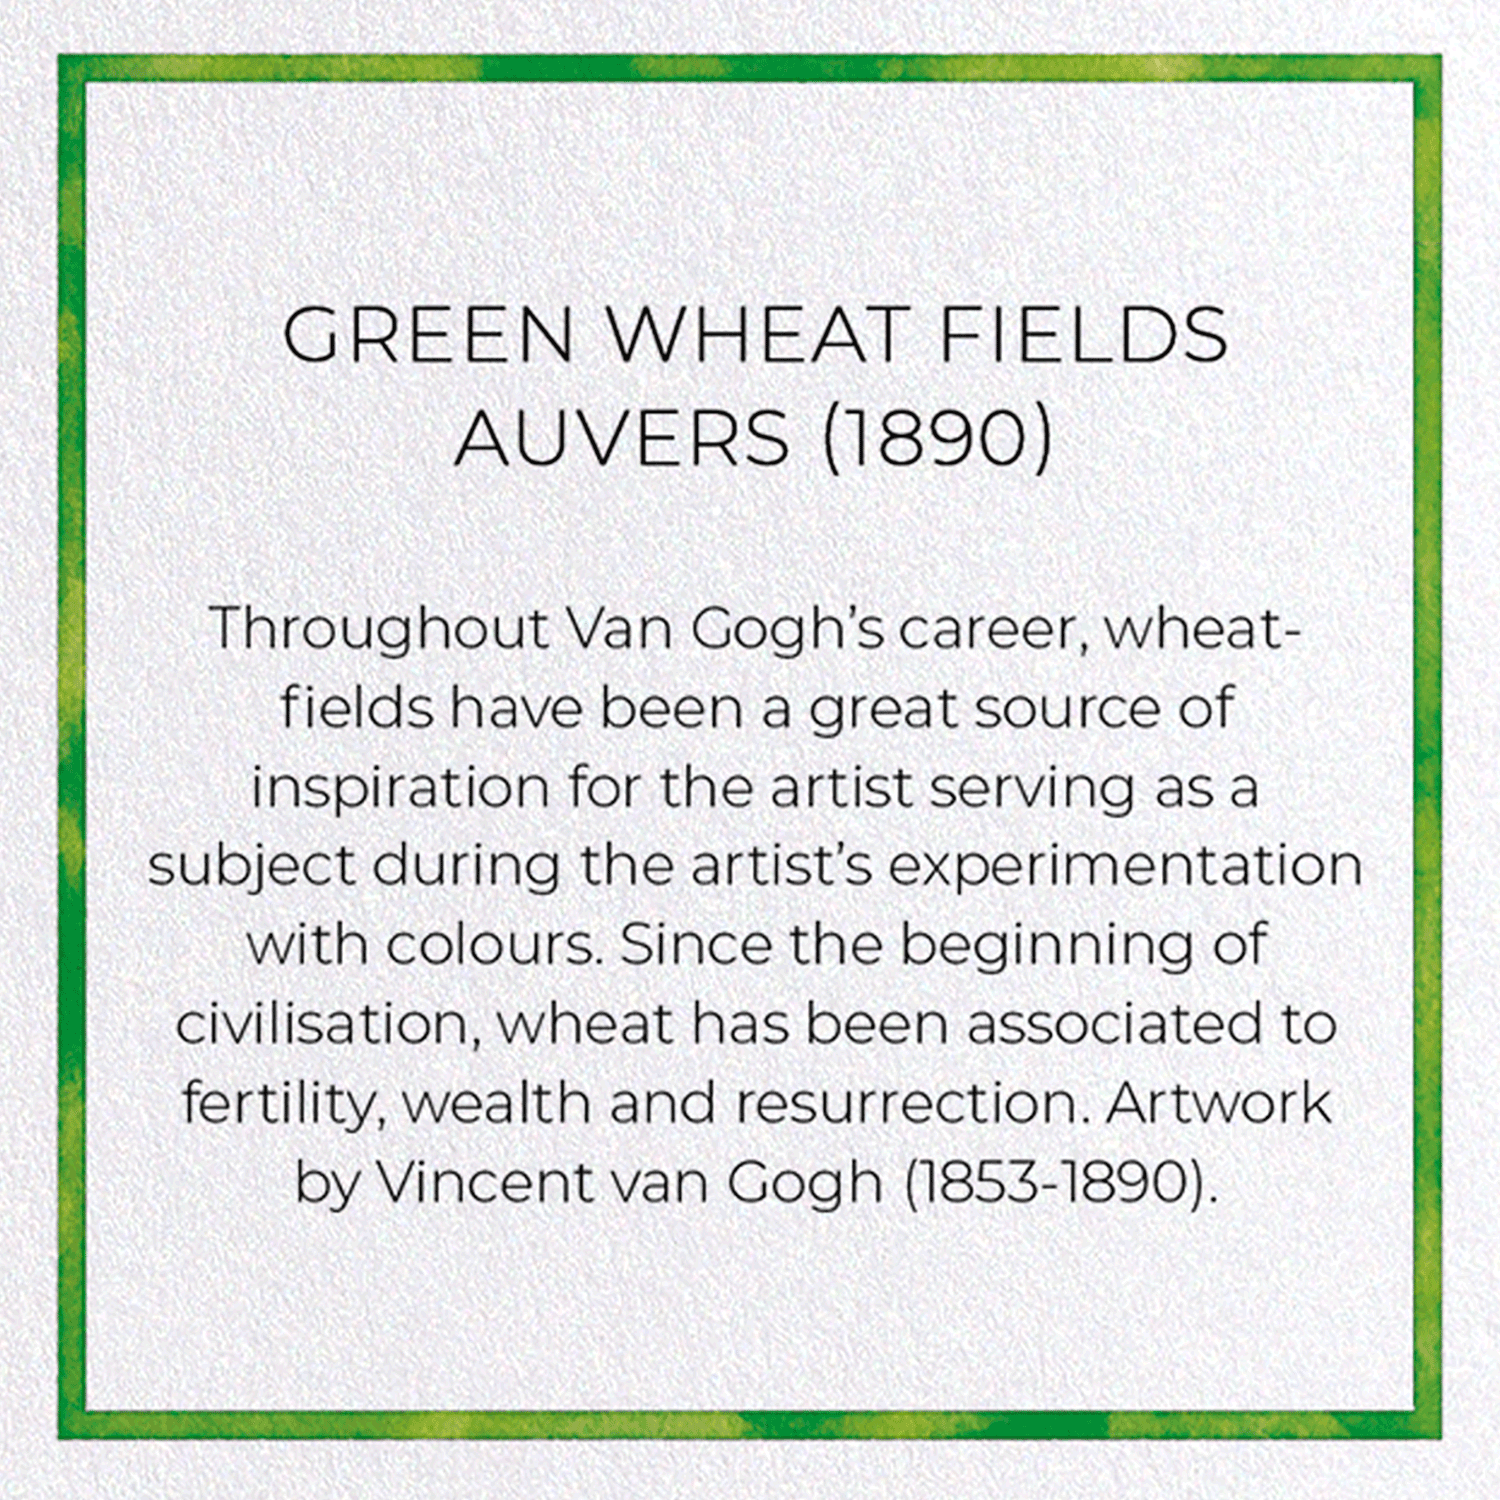 GREEN WHEAT FIELDS AUVERS (1890)